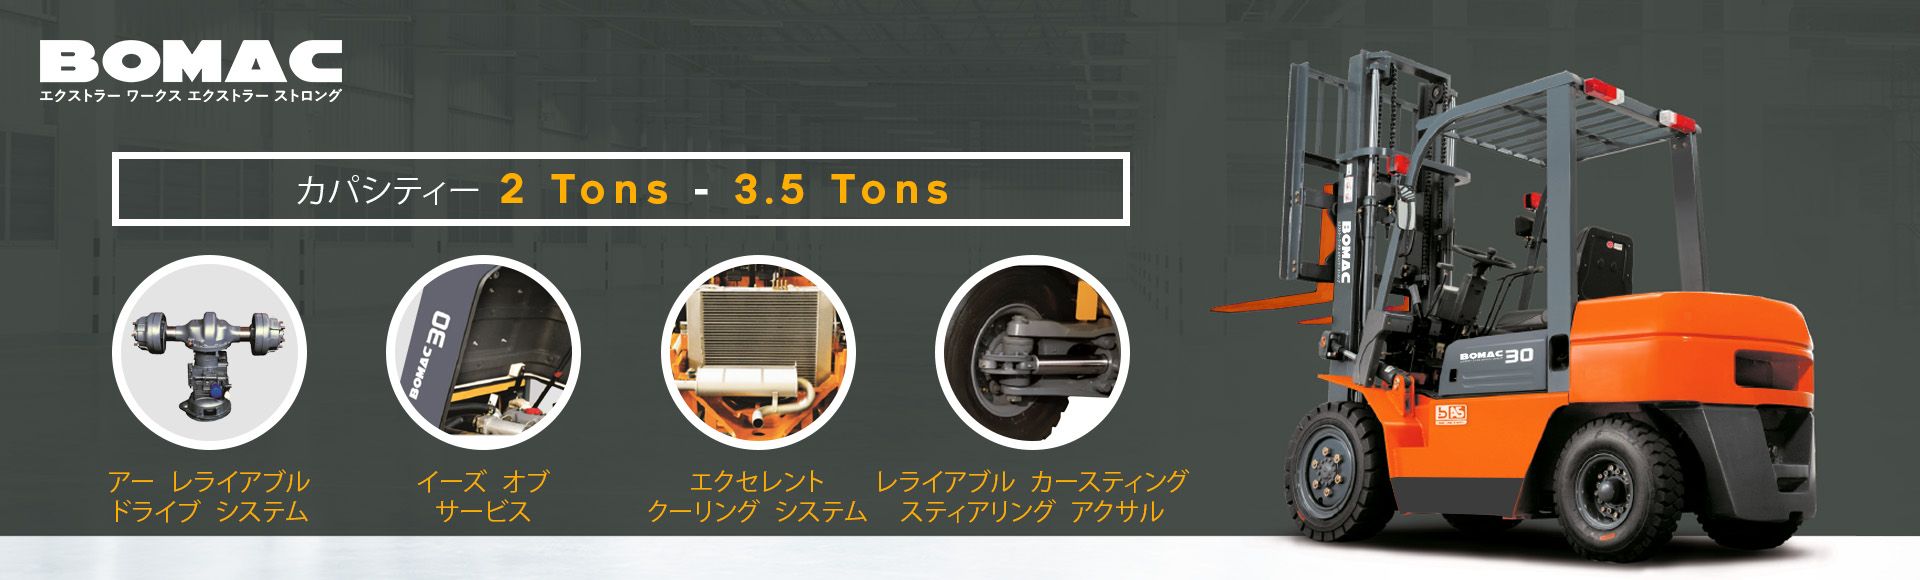 Banner Bomac Forklift Japan 2 TON - 3.5 TON Japan Ver 2